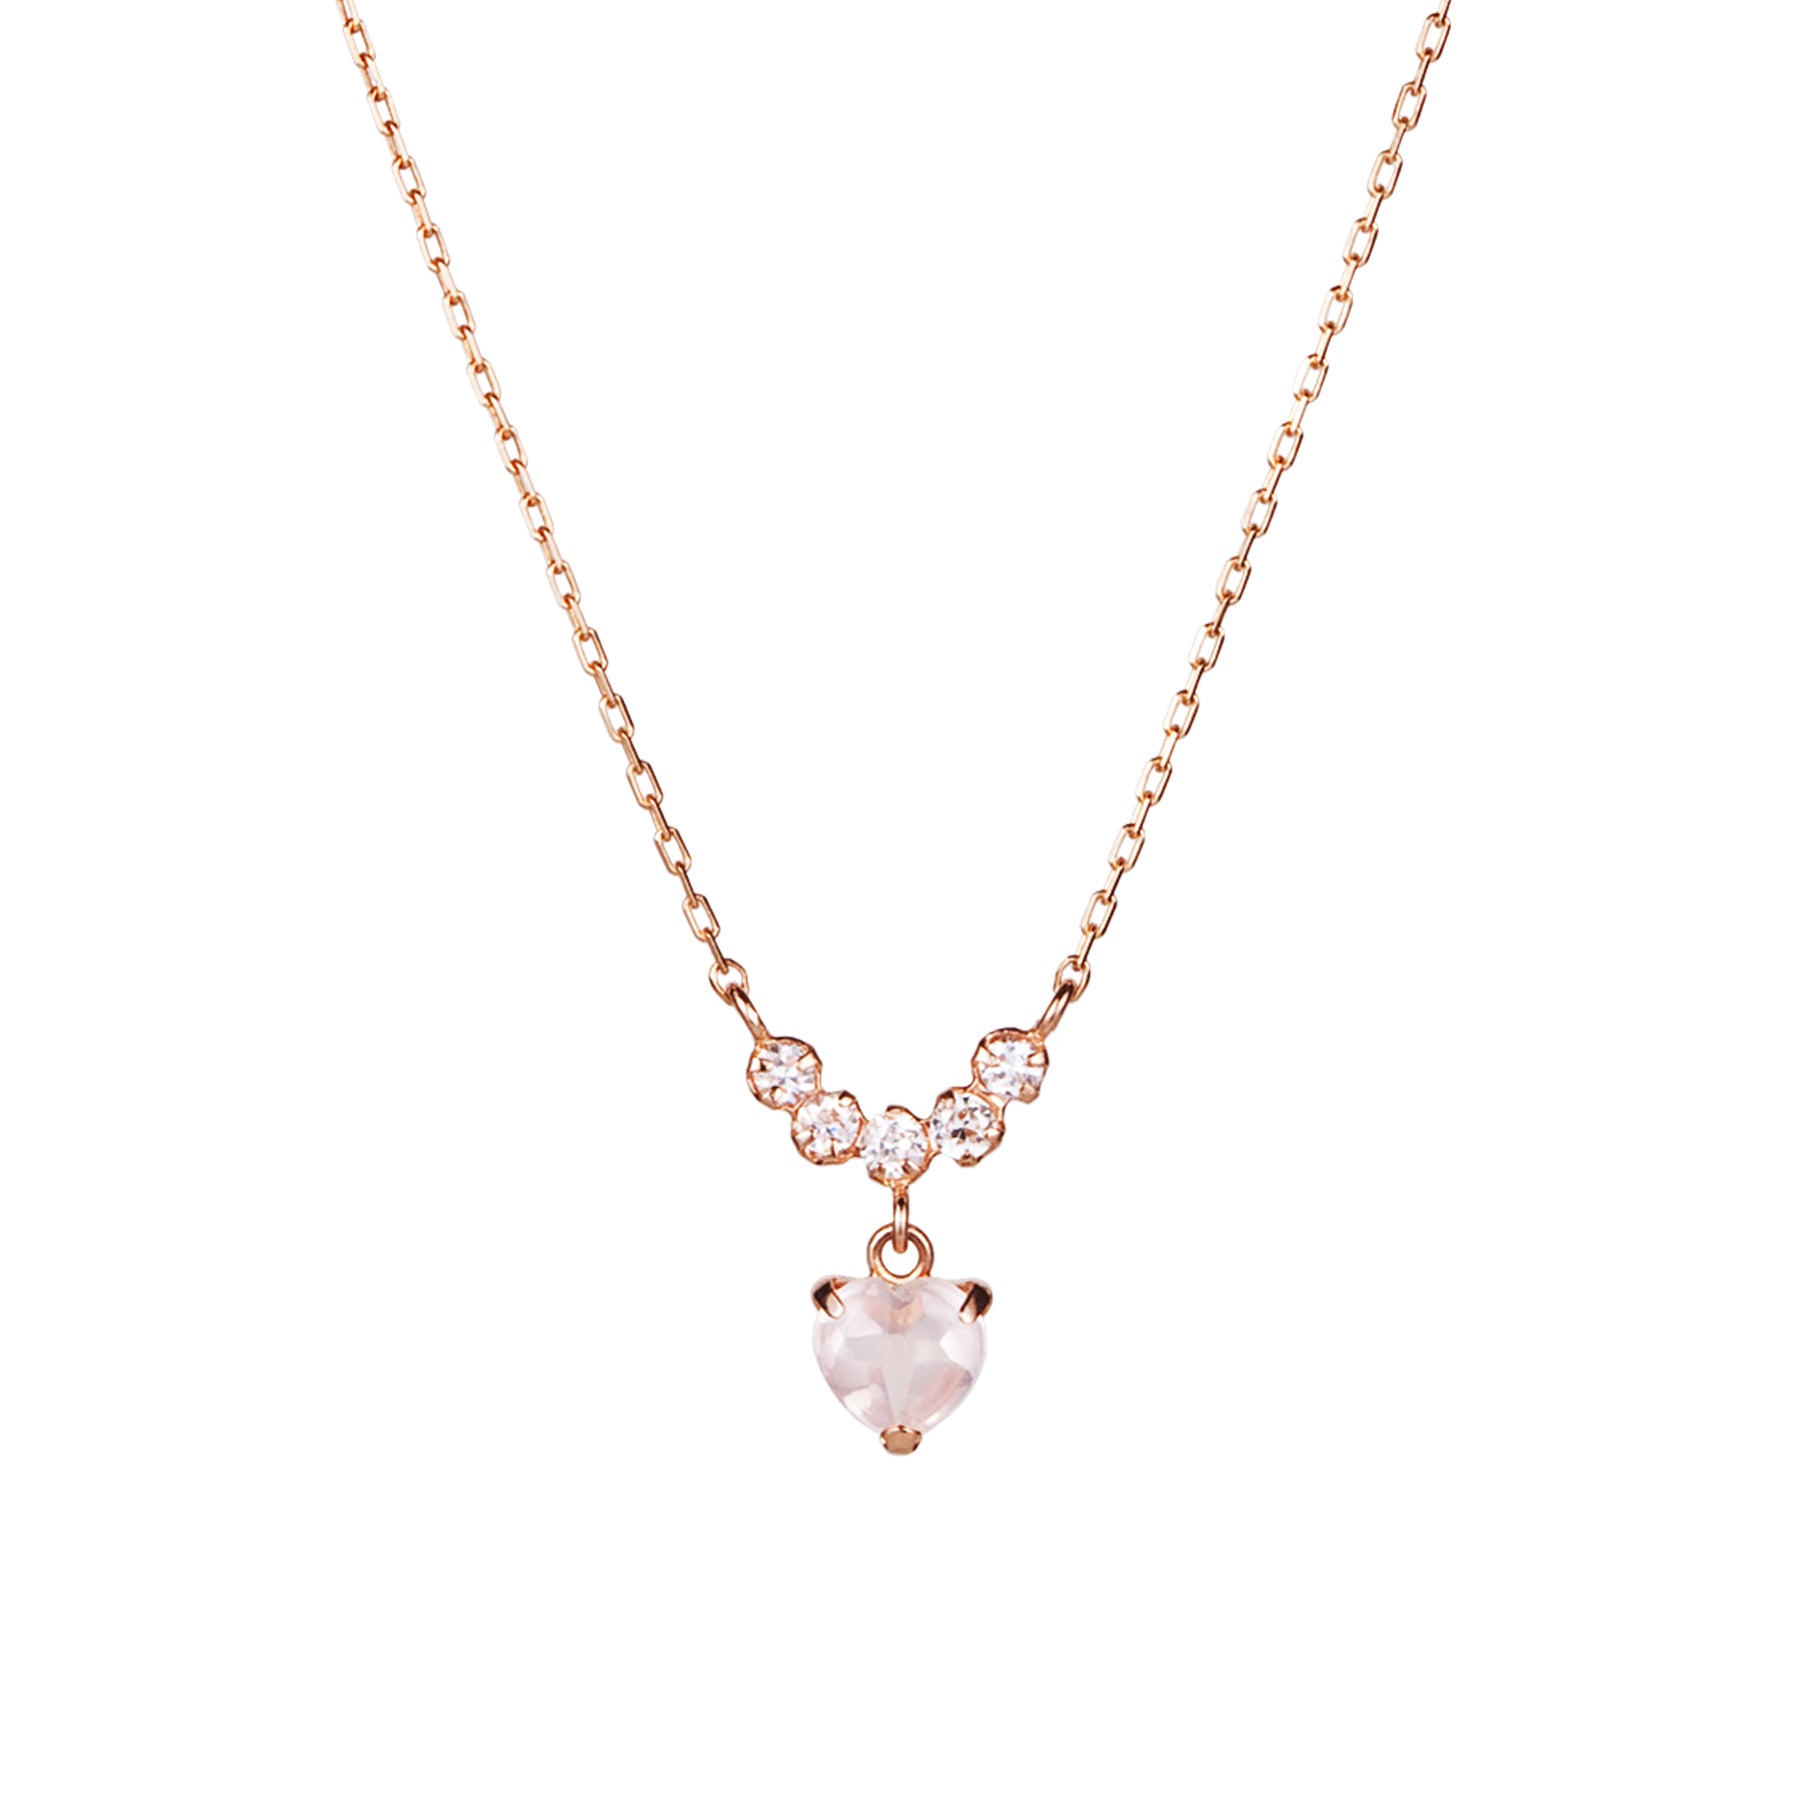 Rose Quartz Heart Necklace (10K Rose Gold) - Product Image